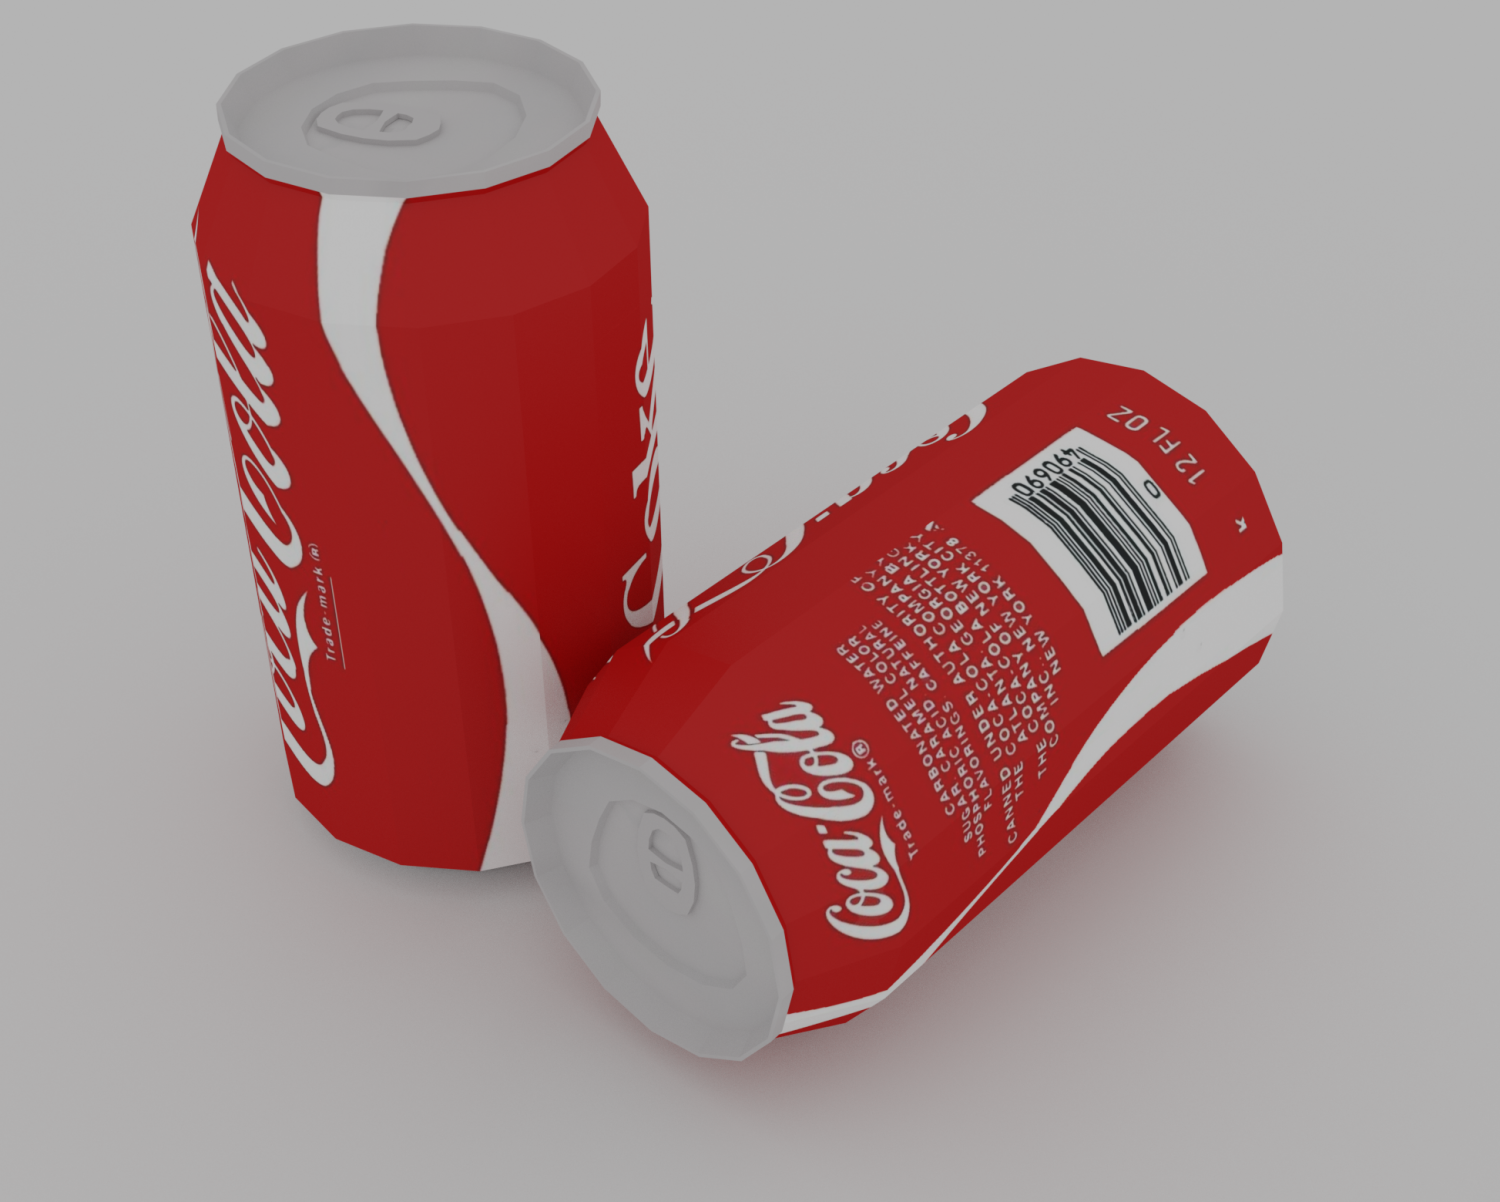 Coca-Cola Dose 12 FL 3D-Modell - Herunterladen Lebensmittel on